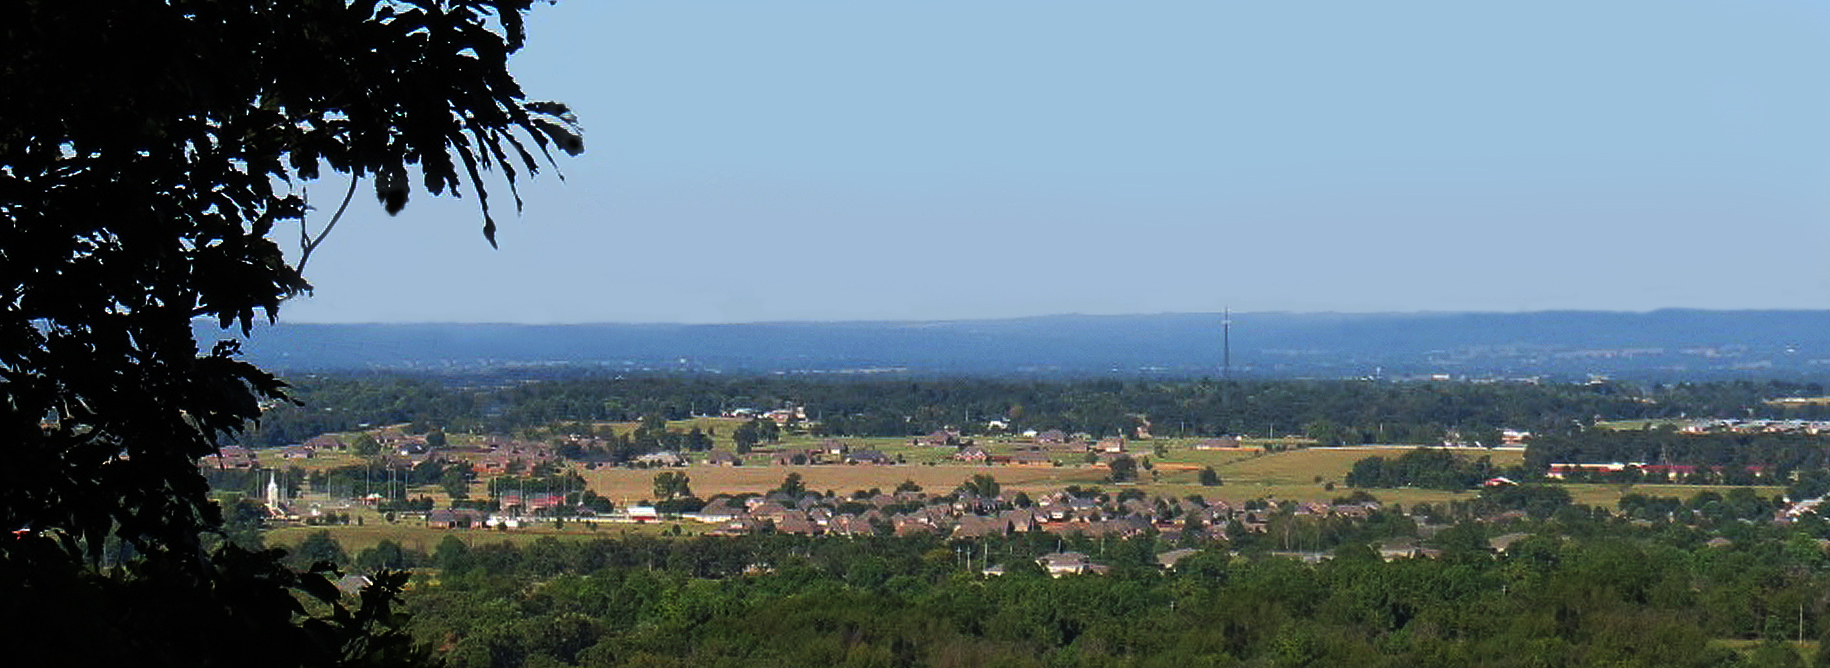 Farmington city photo aerial view